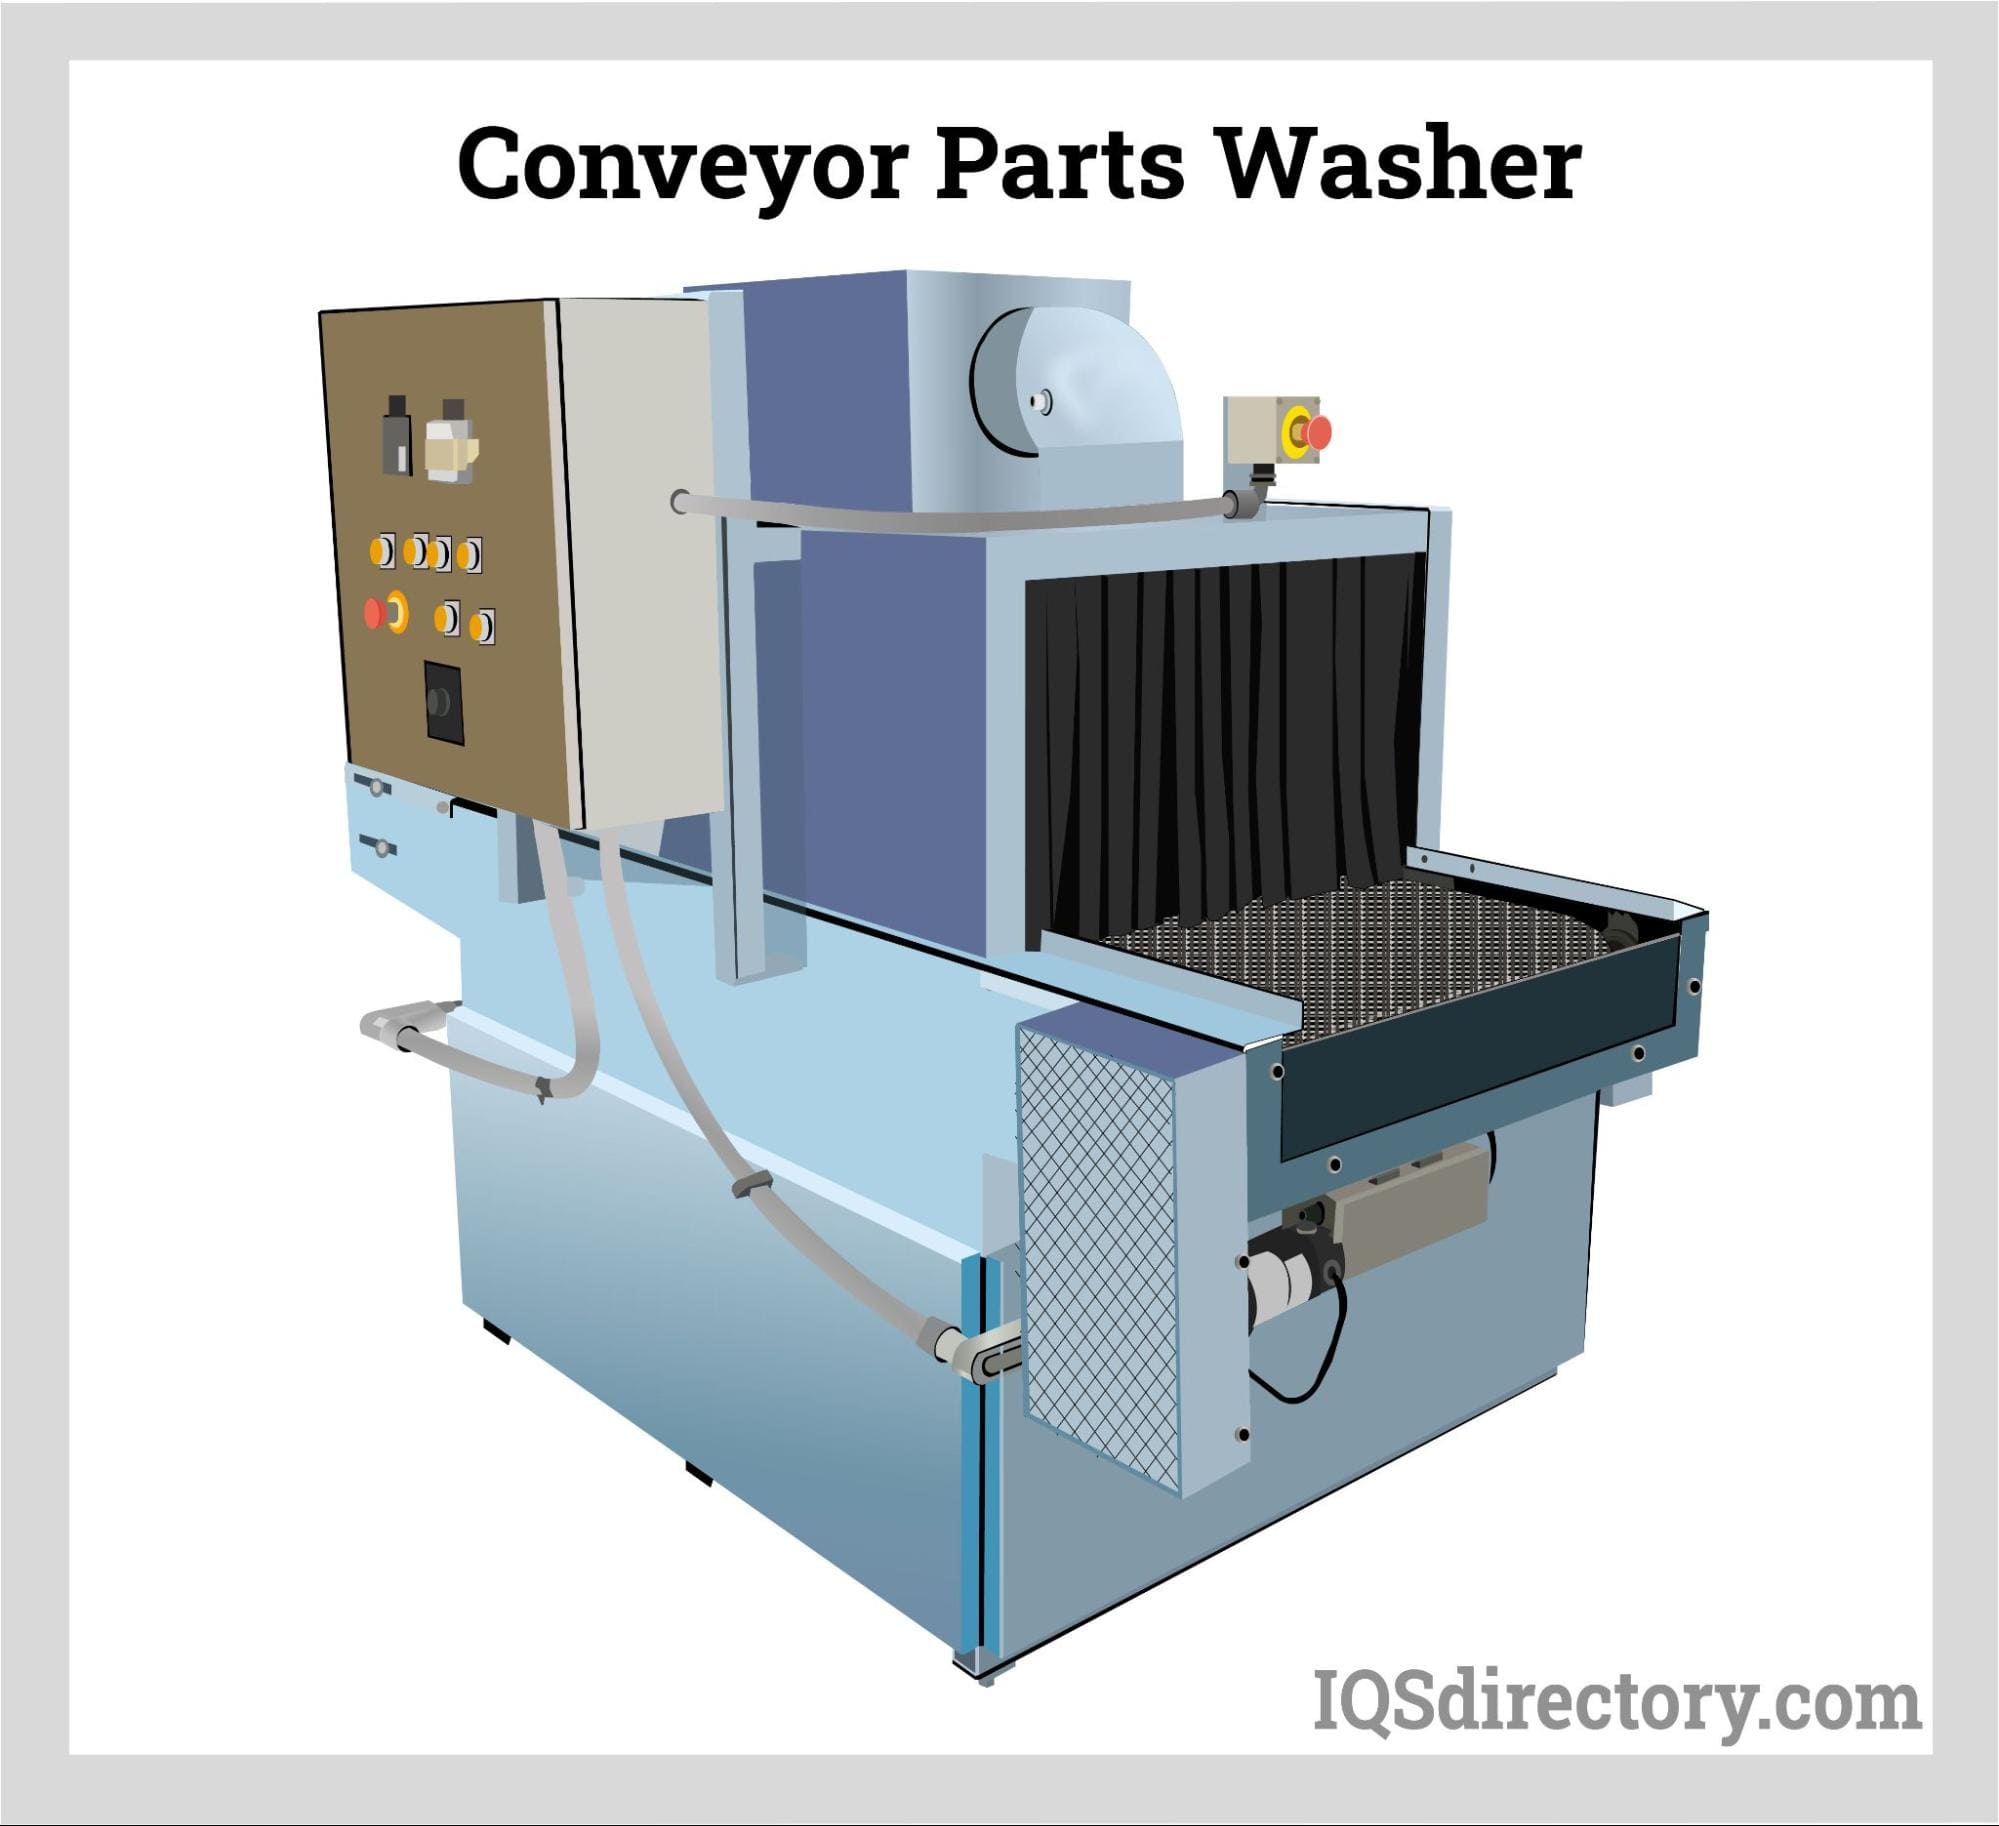 Conveyor Parts Washer